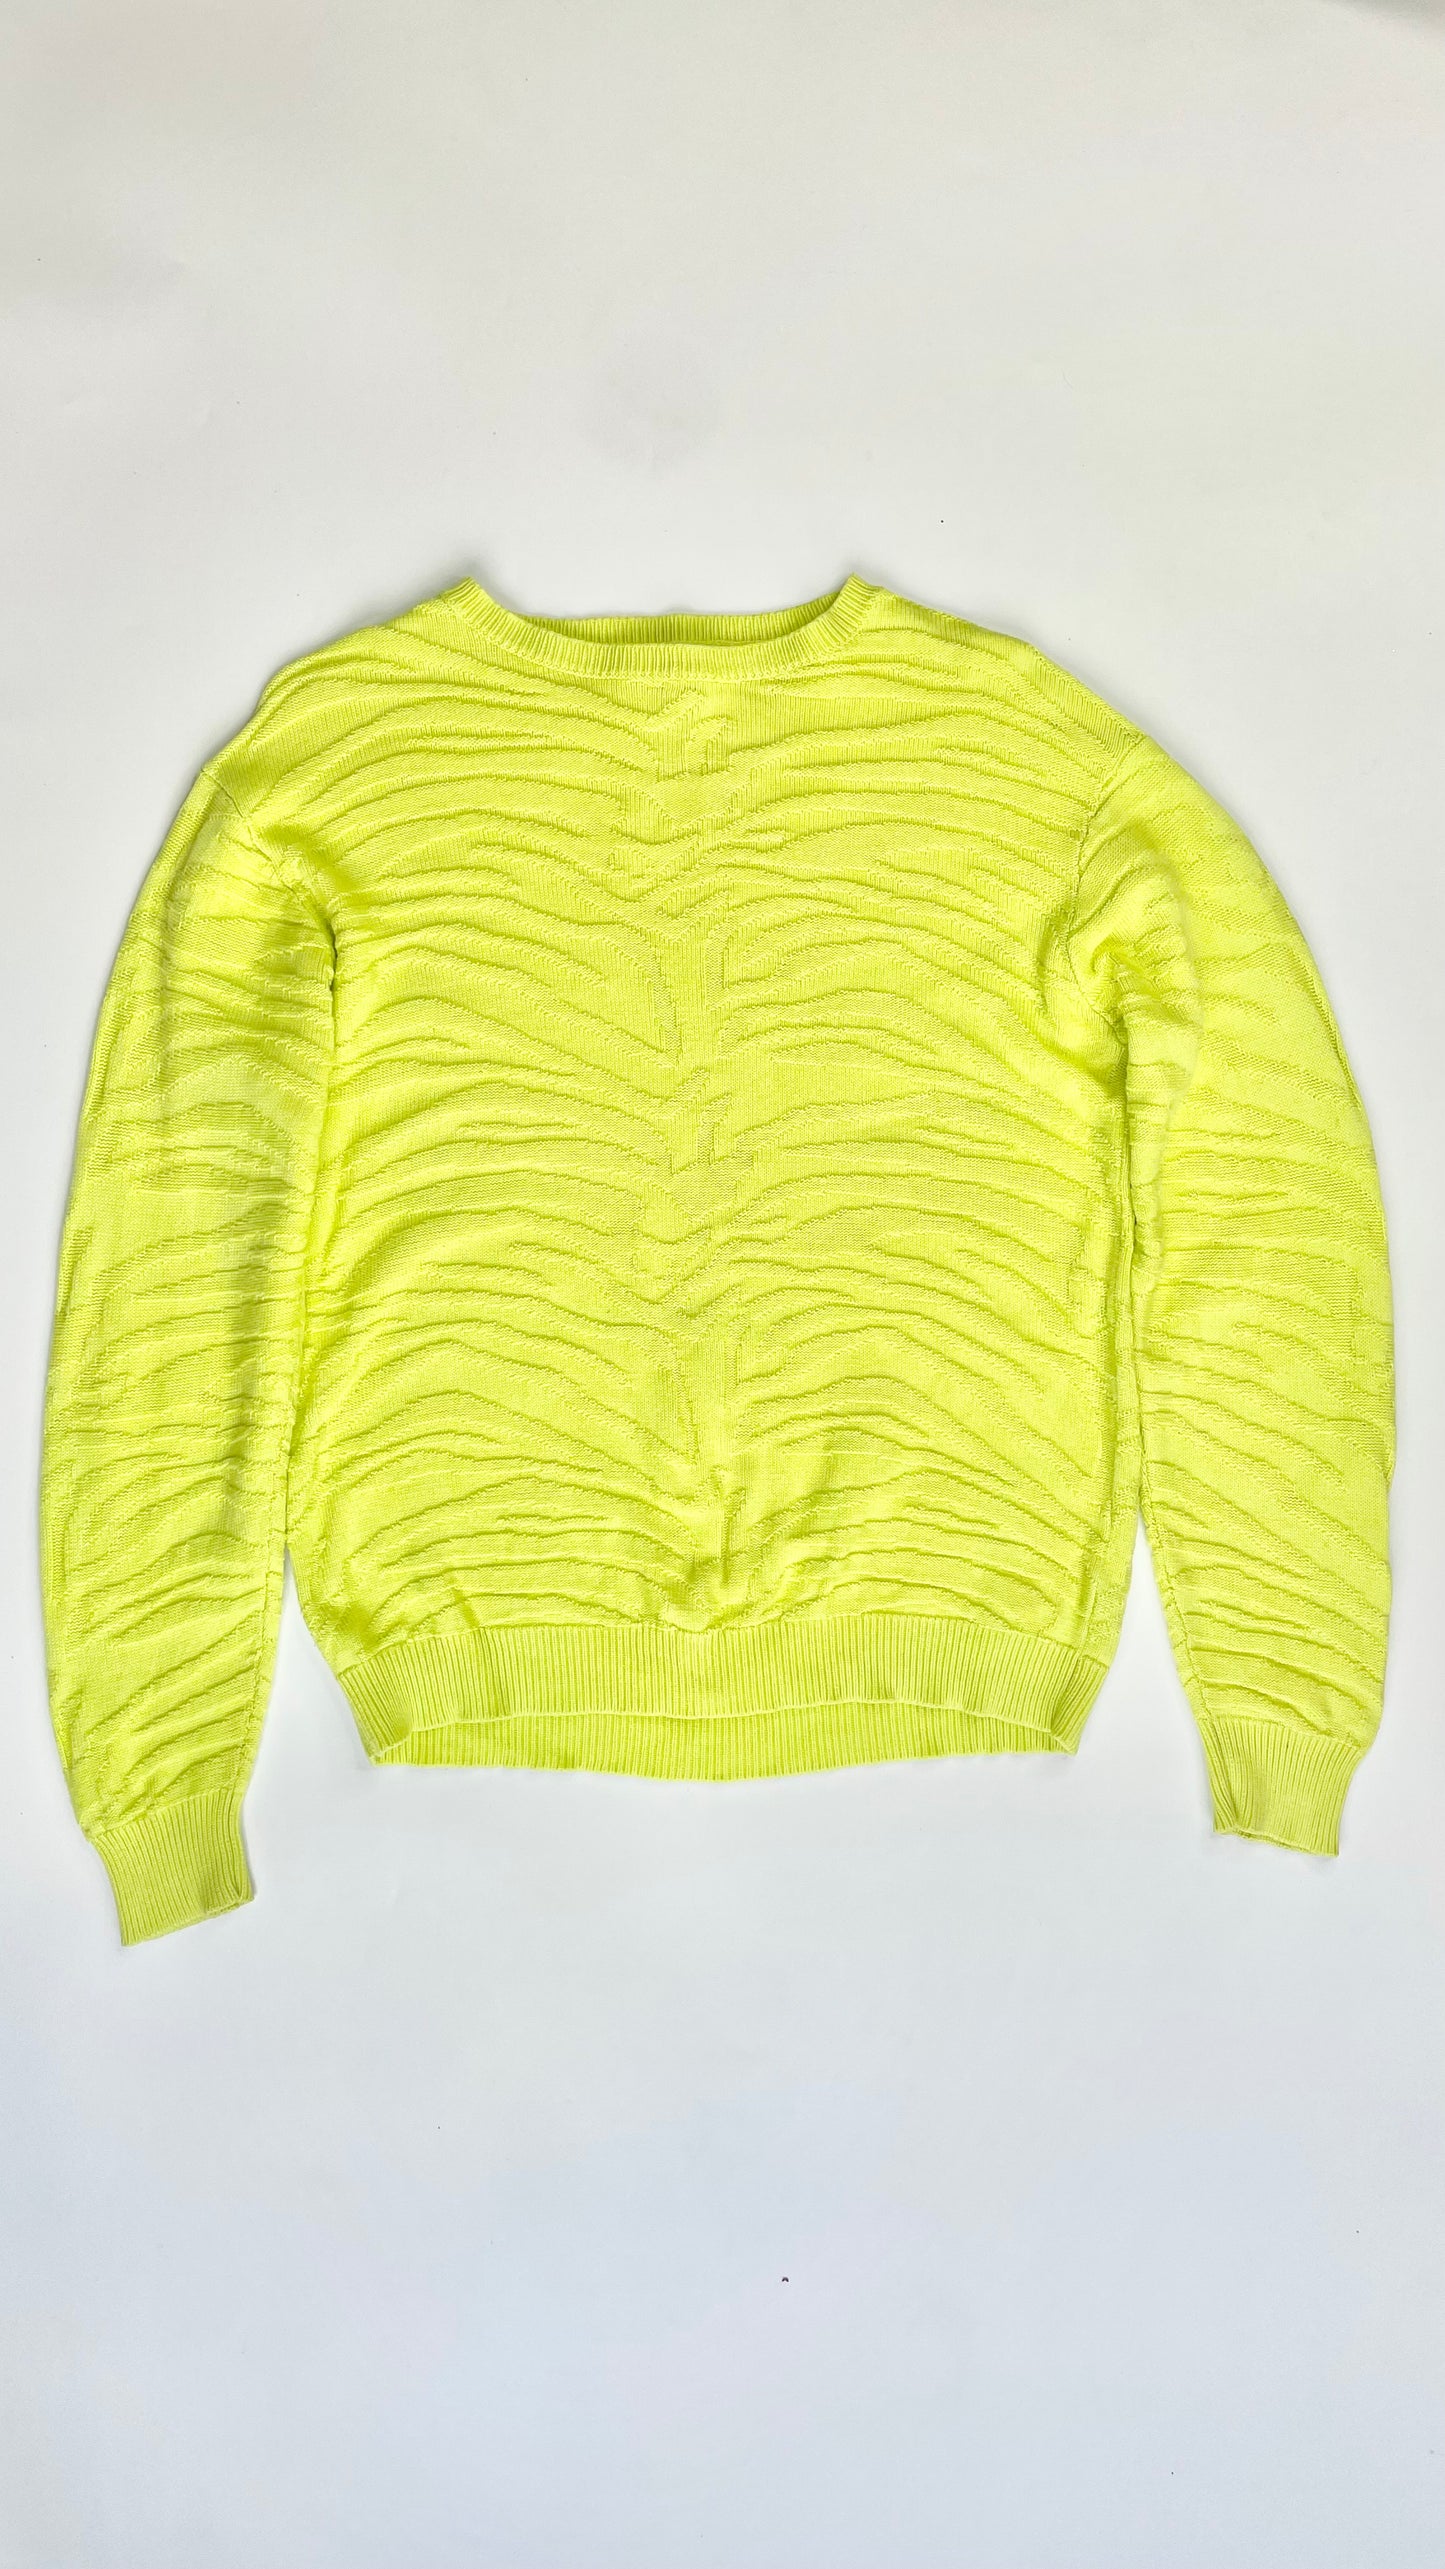 Pre-Loved zebra John & Jenn neon green knit sweater - Size M